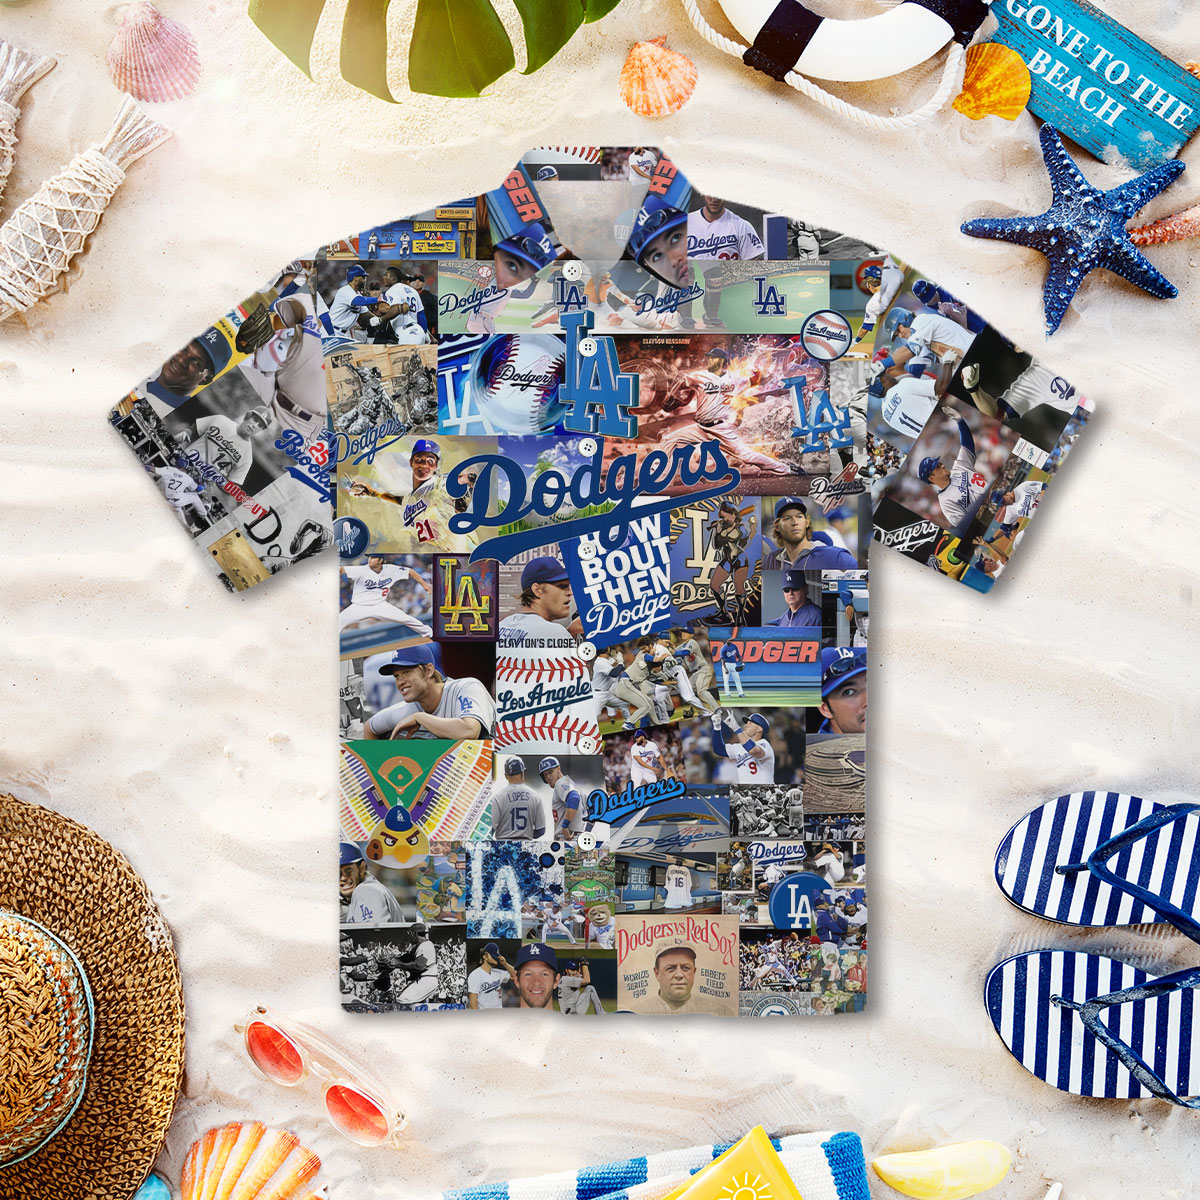 Endastore Dodgers 3D Hawaiian Shirt